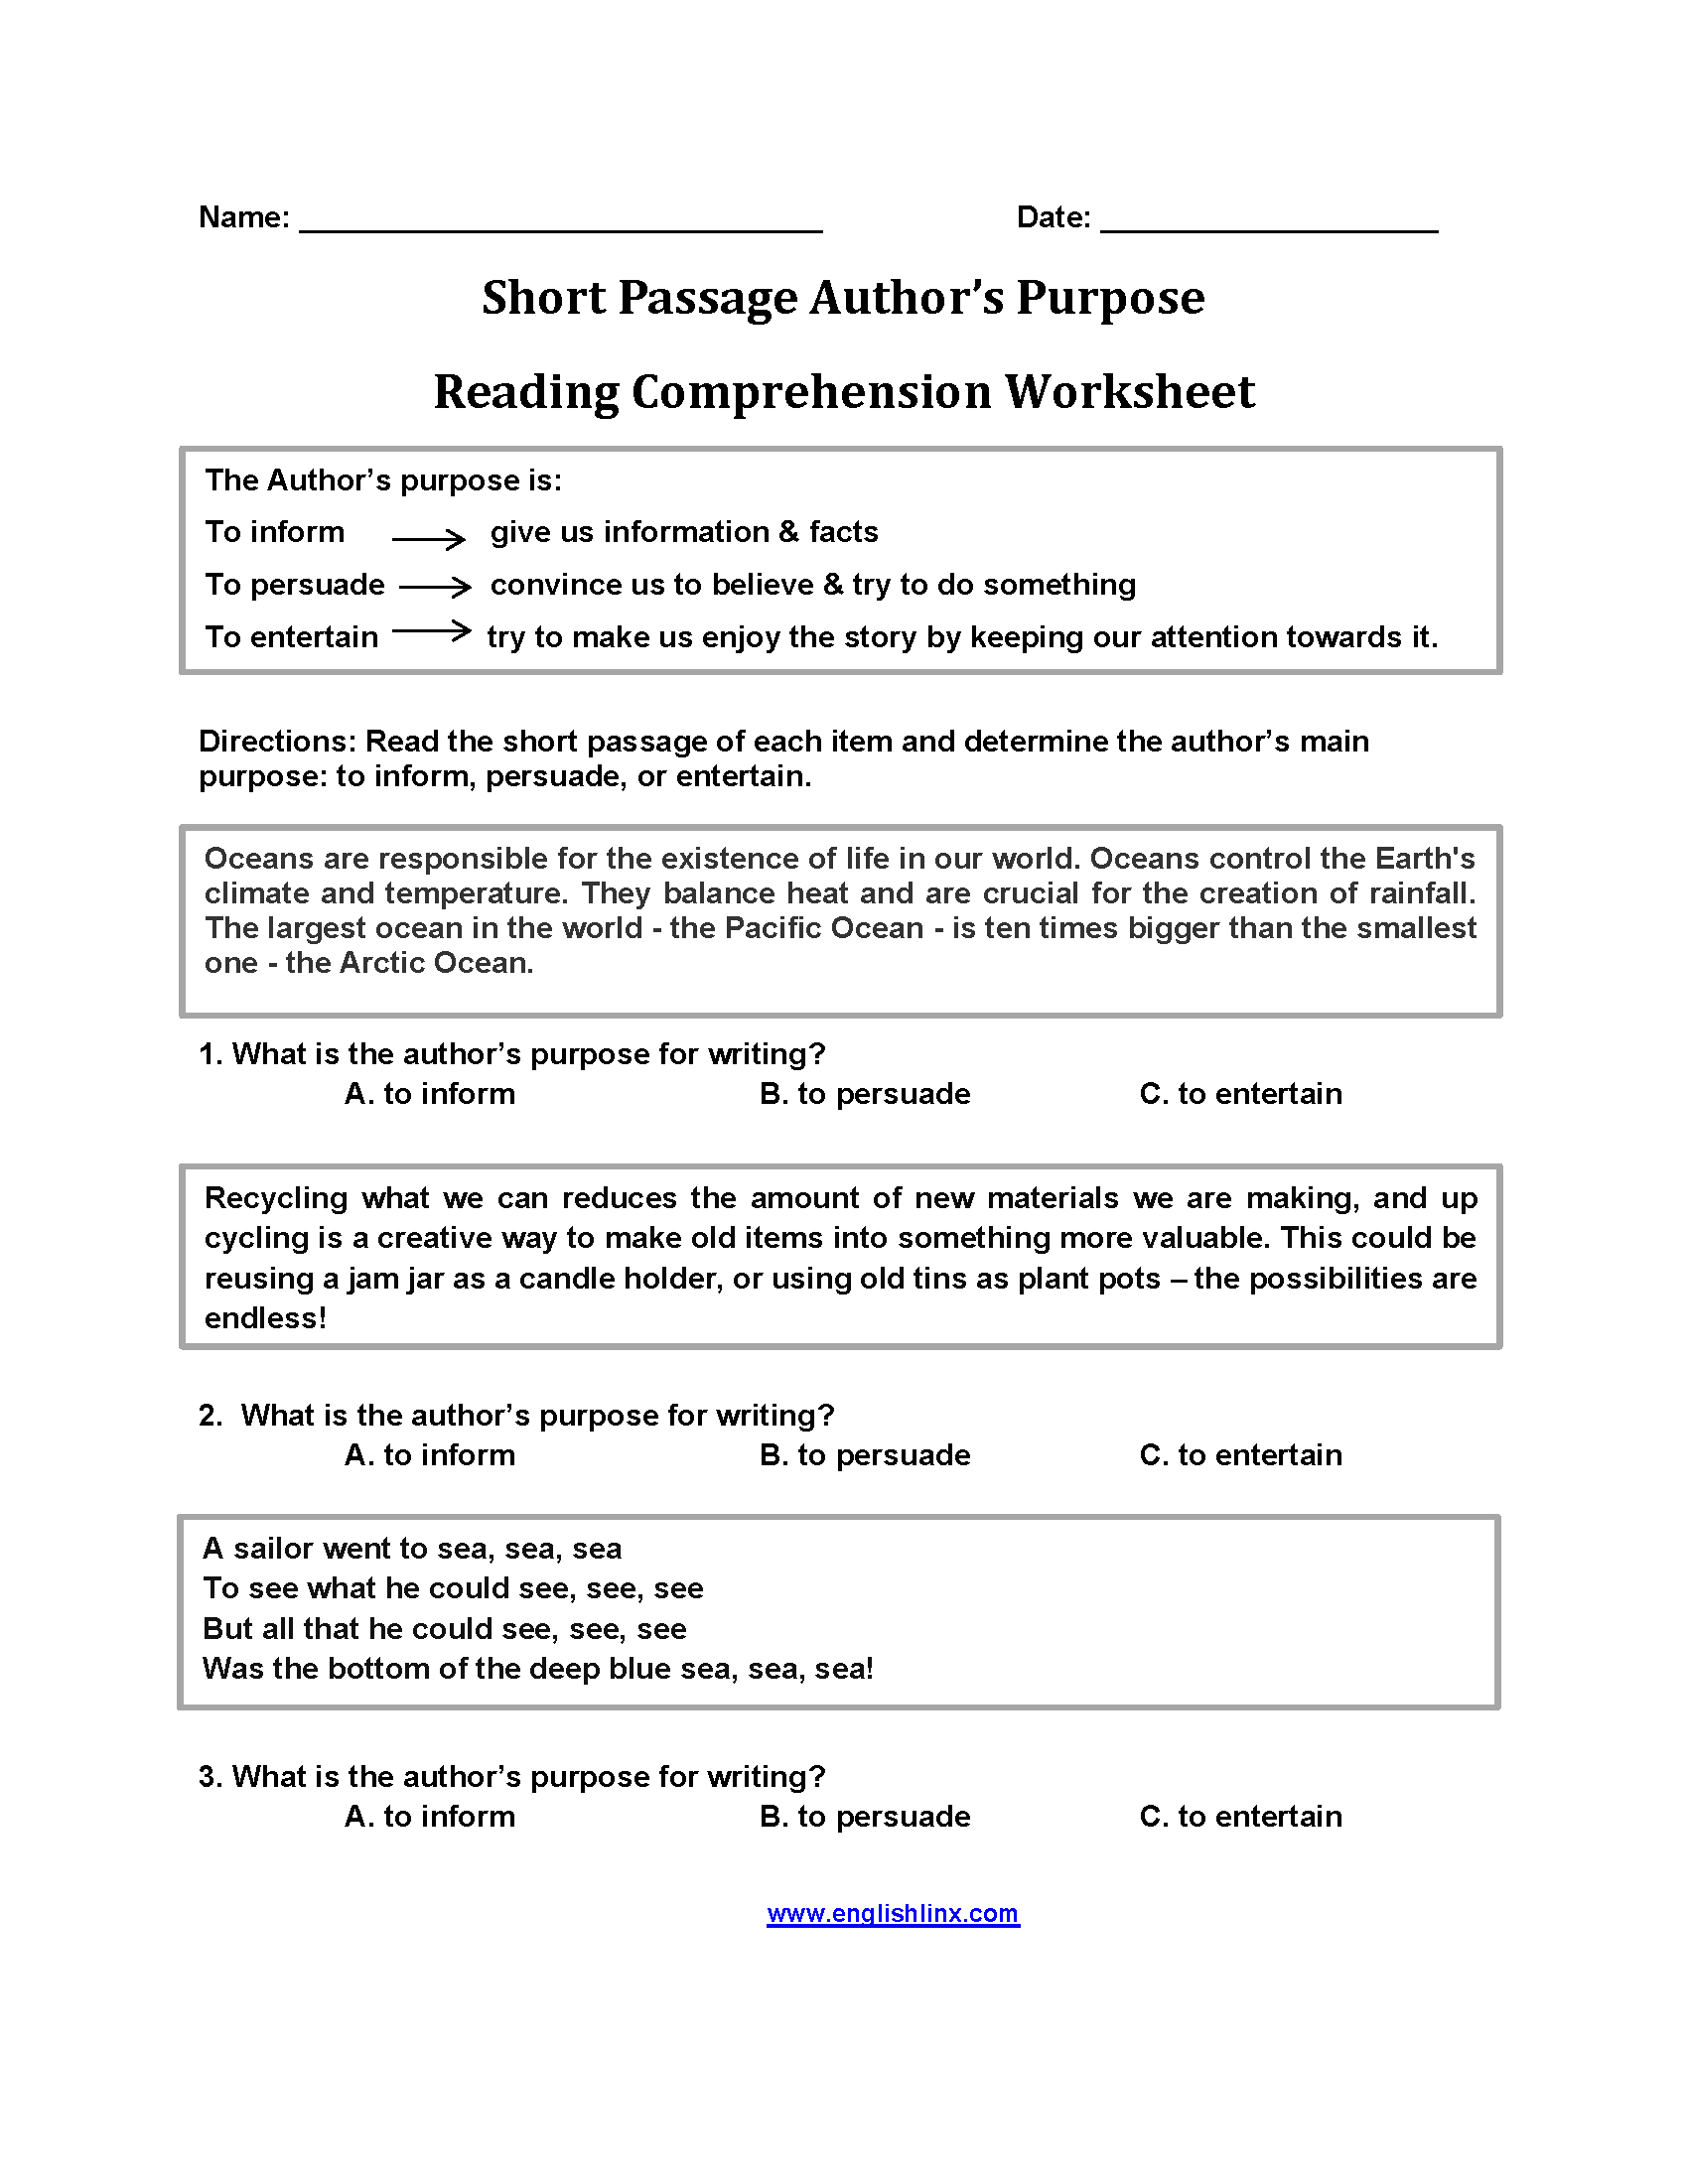 Short Passage Author's Purpose Worksheets